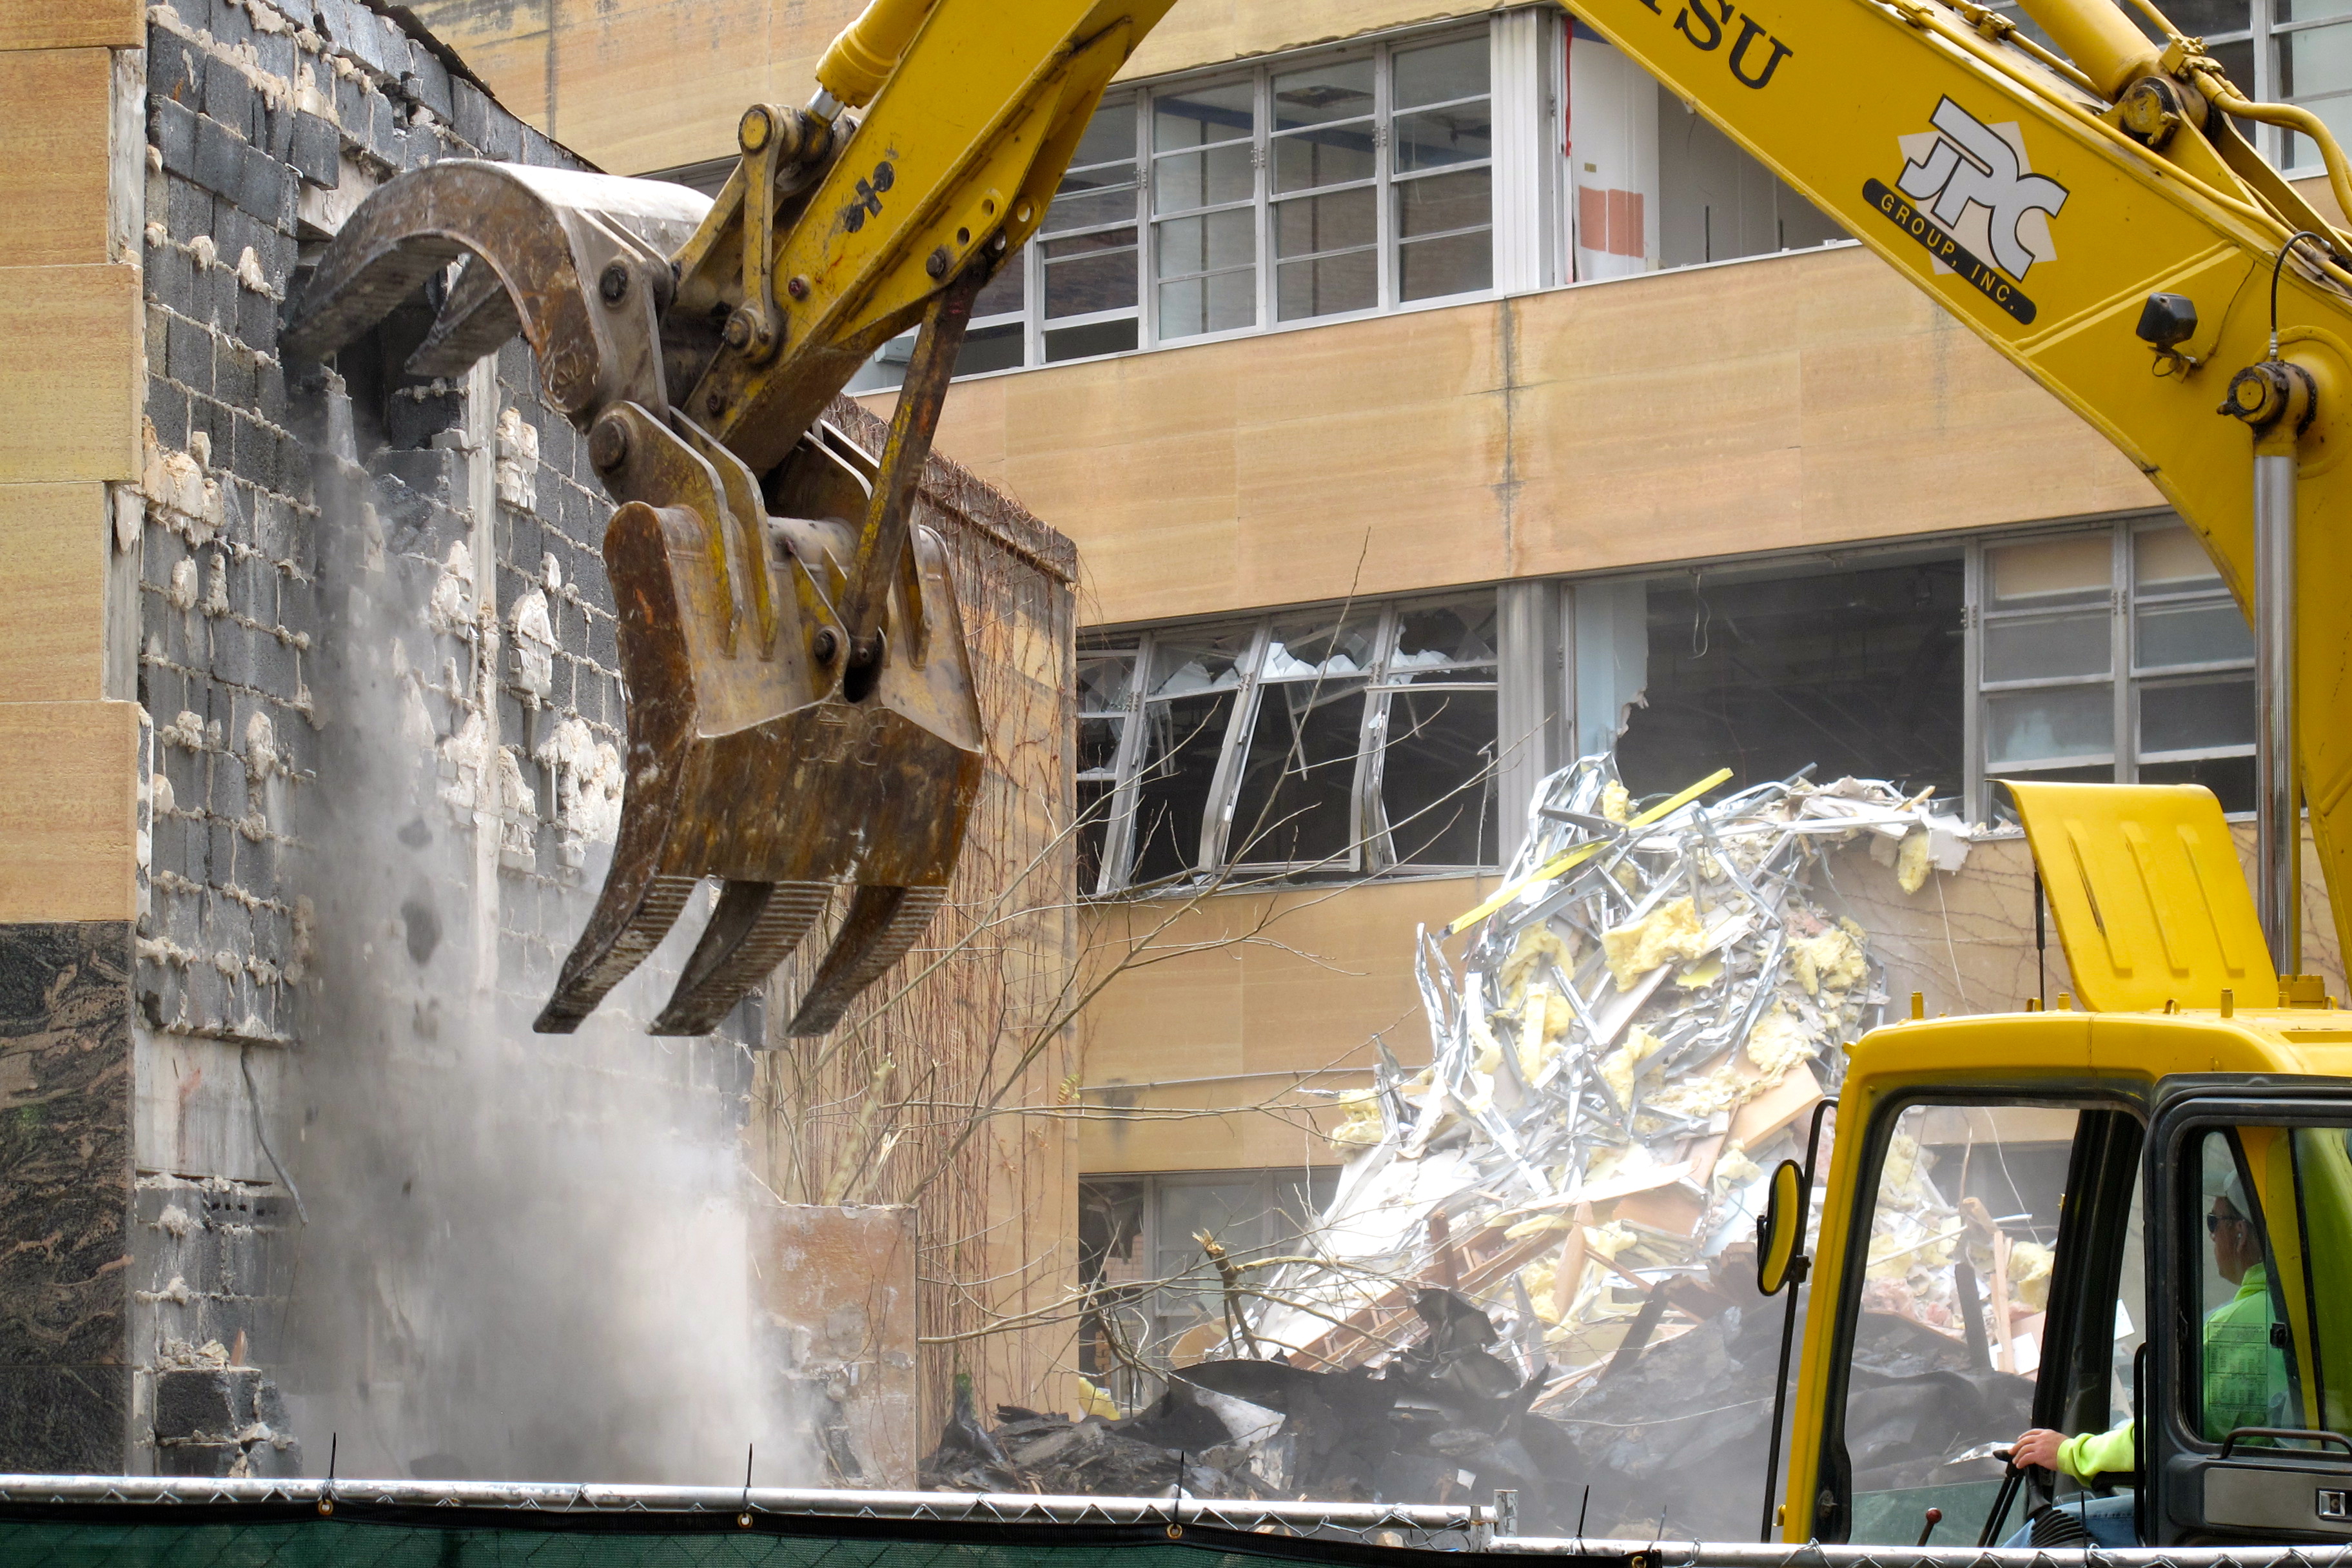 The Sidney Hillman Medical Center demolition started today.